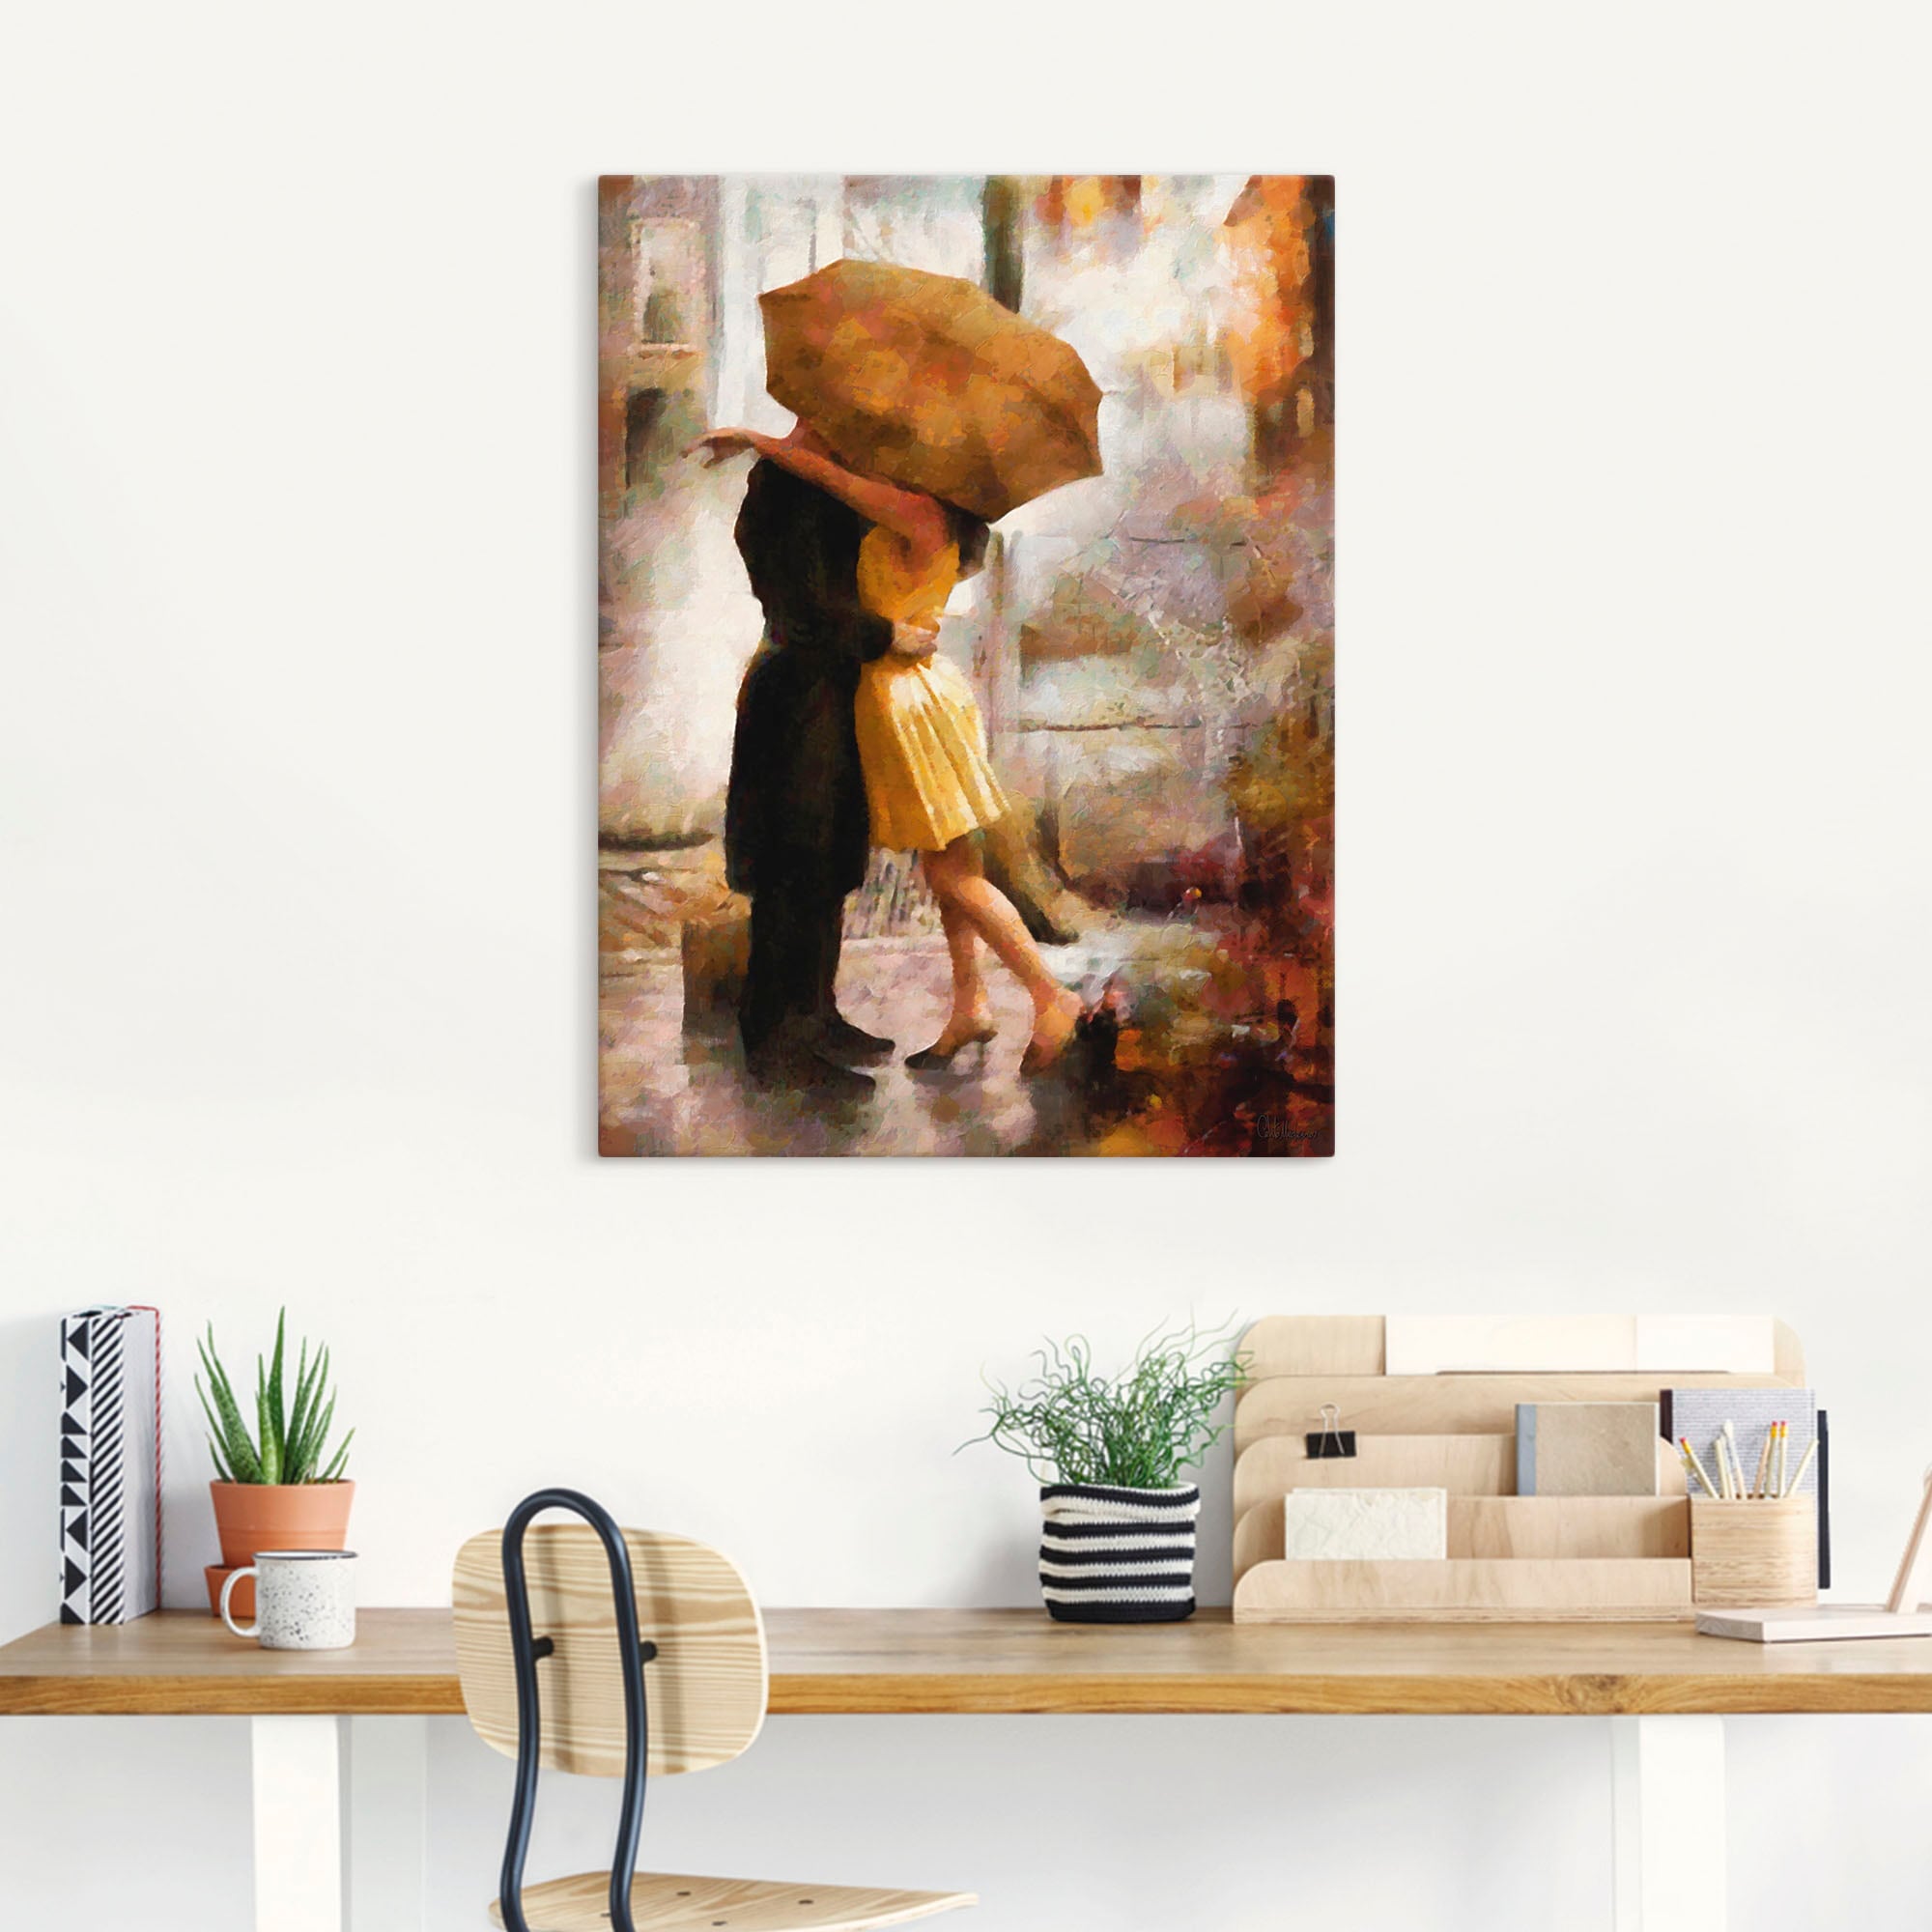 Artland Wandbild »Kuss unter Regenschirm«, Bilder von Liebespaaren, (1 St.), als Leinwandbild, Poster in verschied. Größen